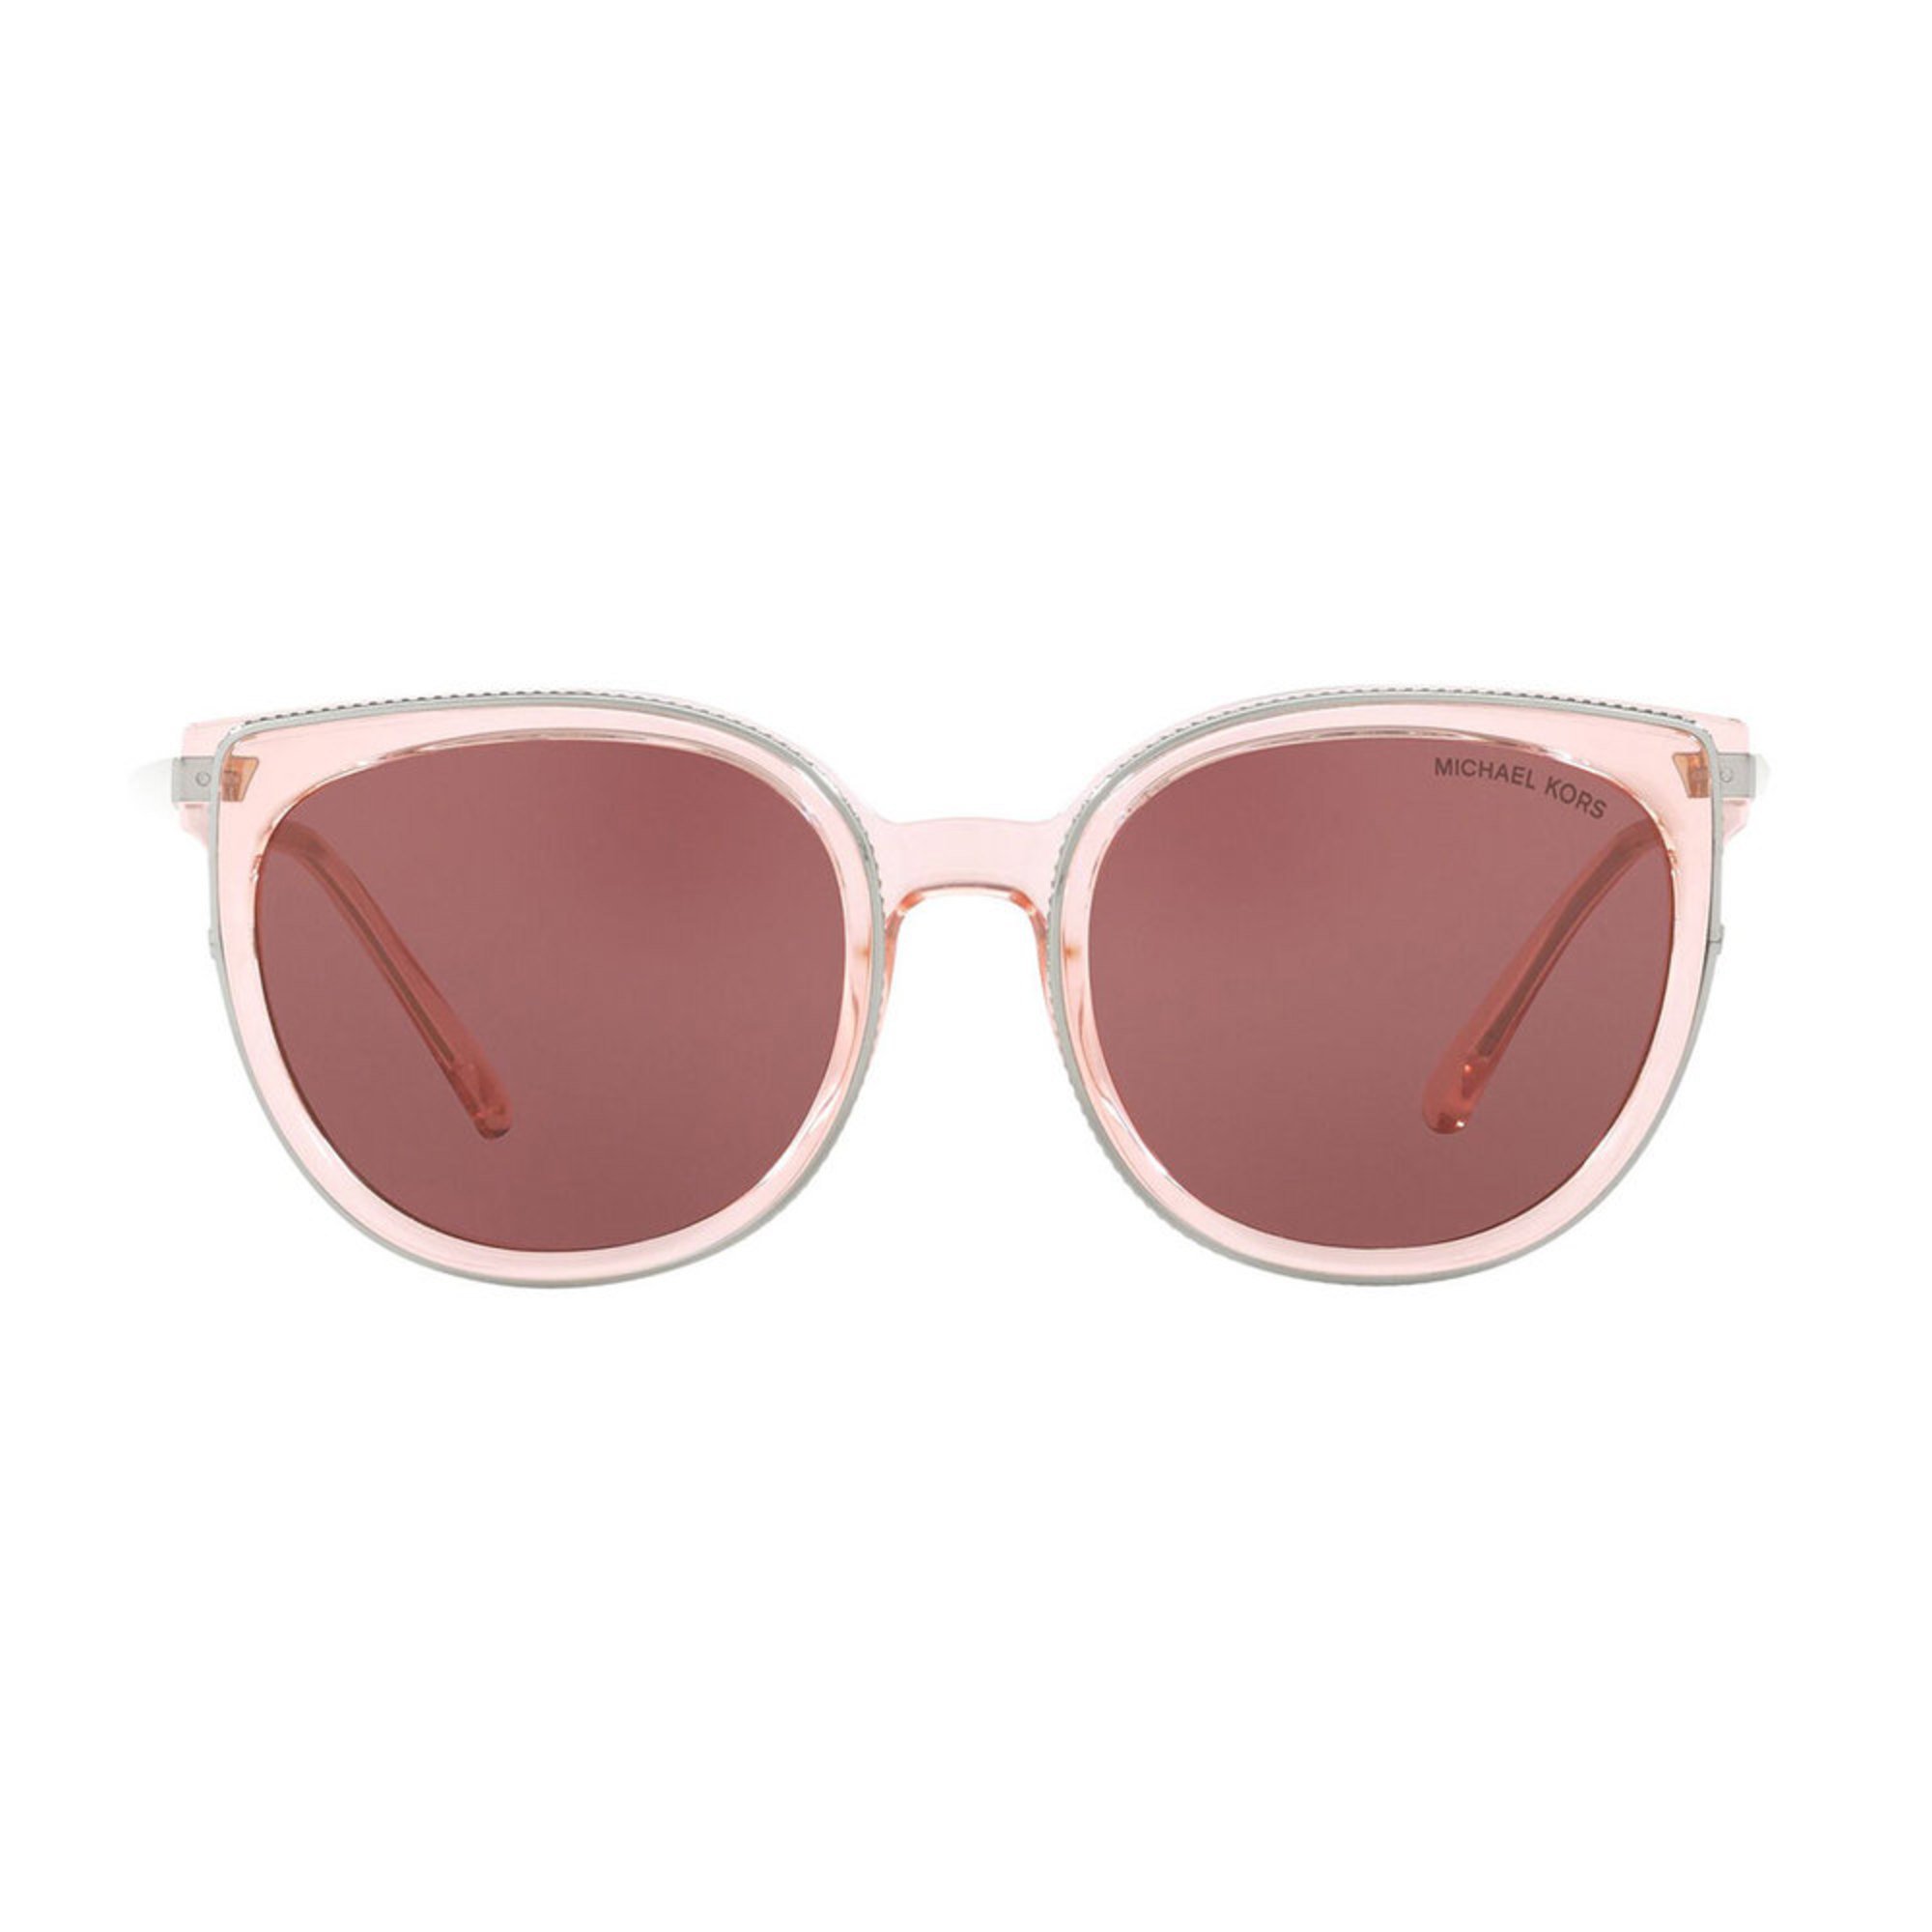 Michael Kors Womens Bal Harbour Square Pink Sunglasses 